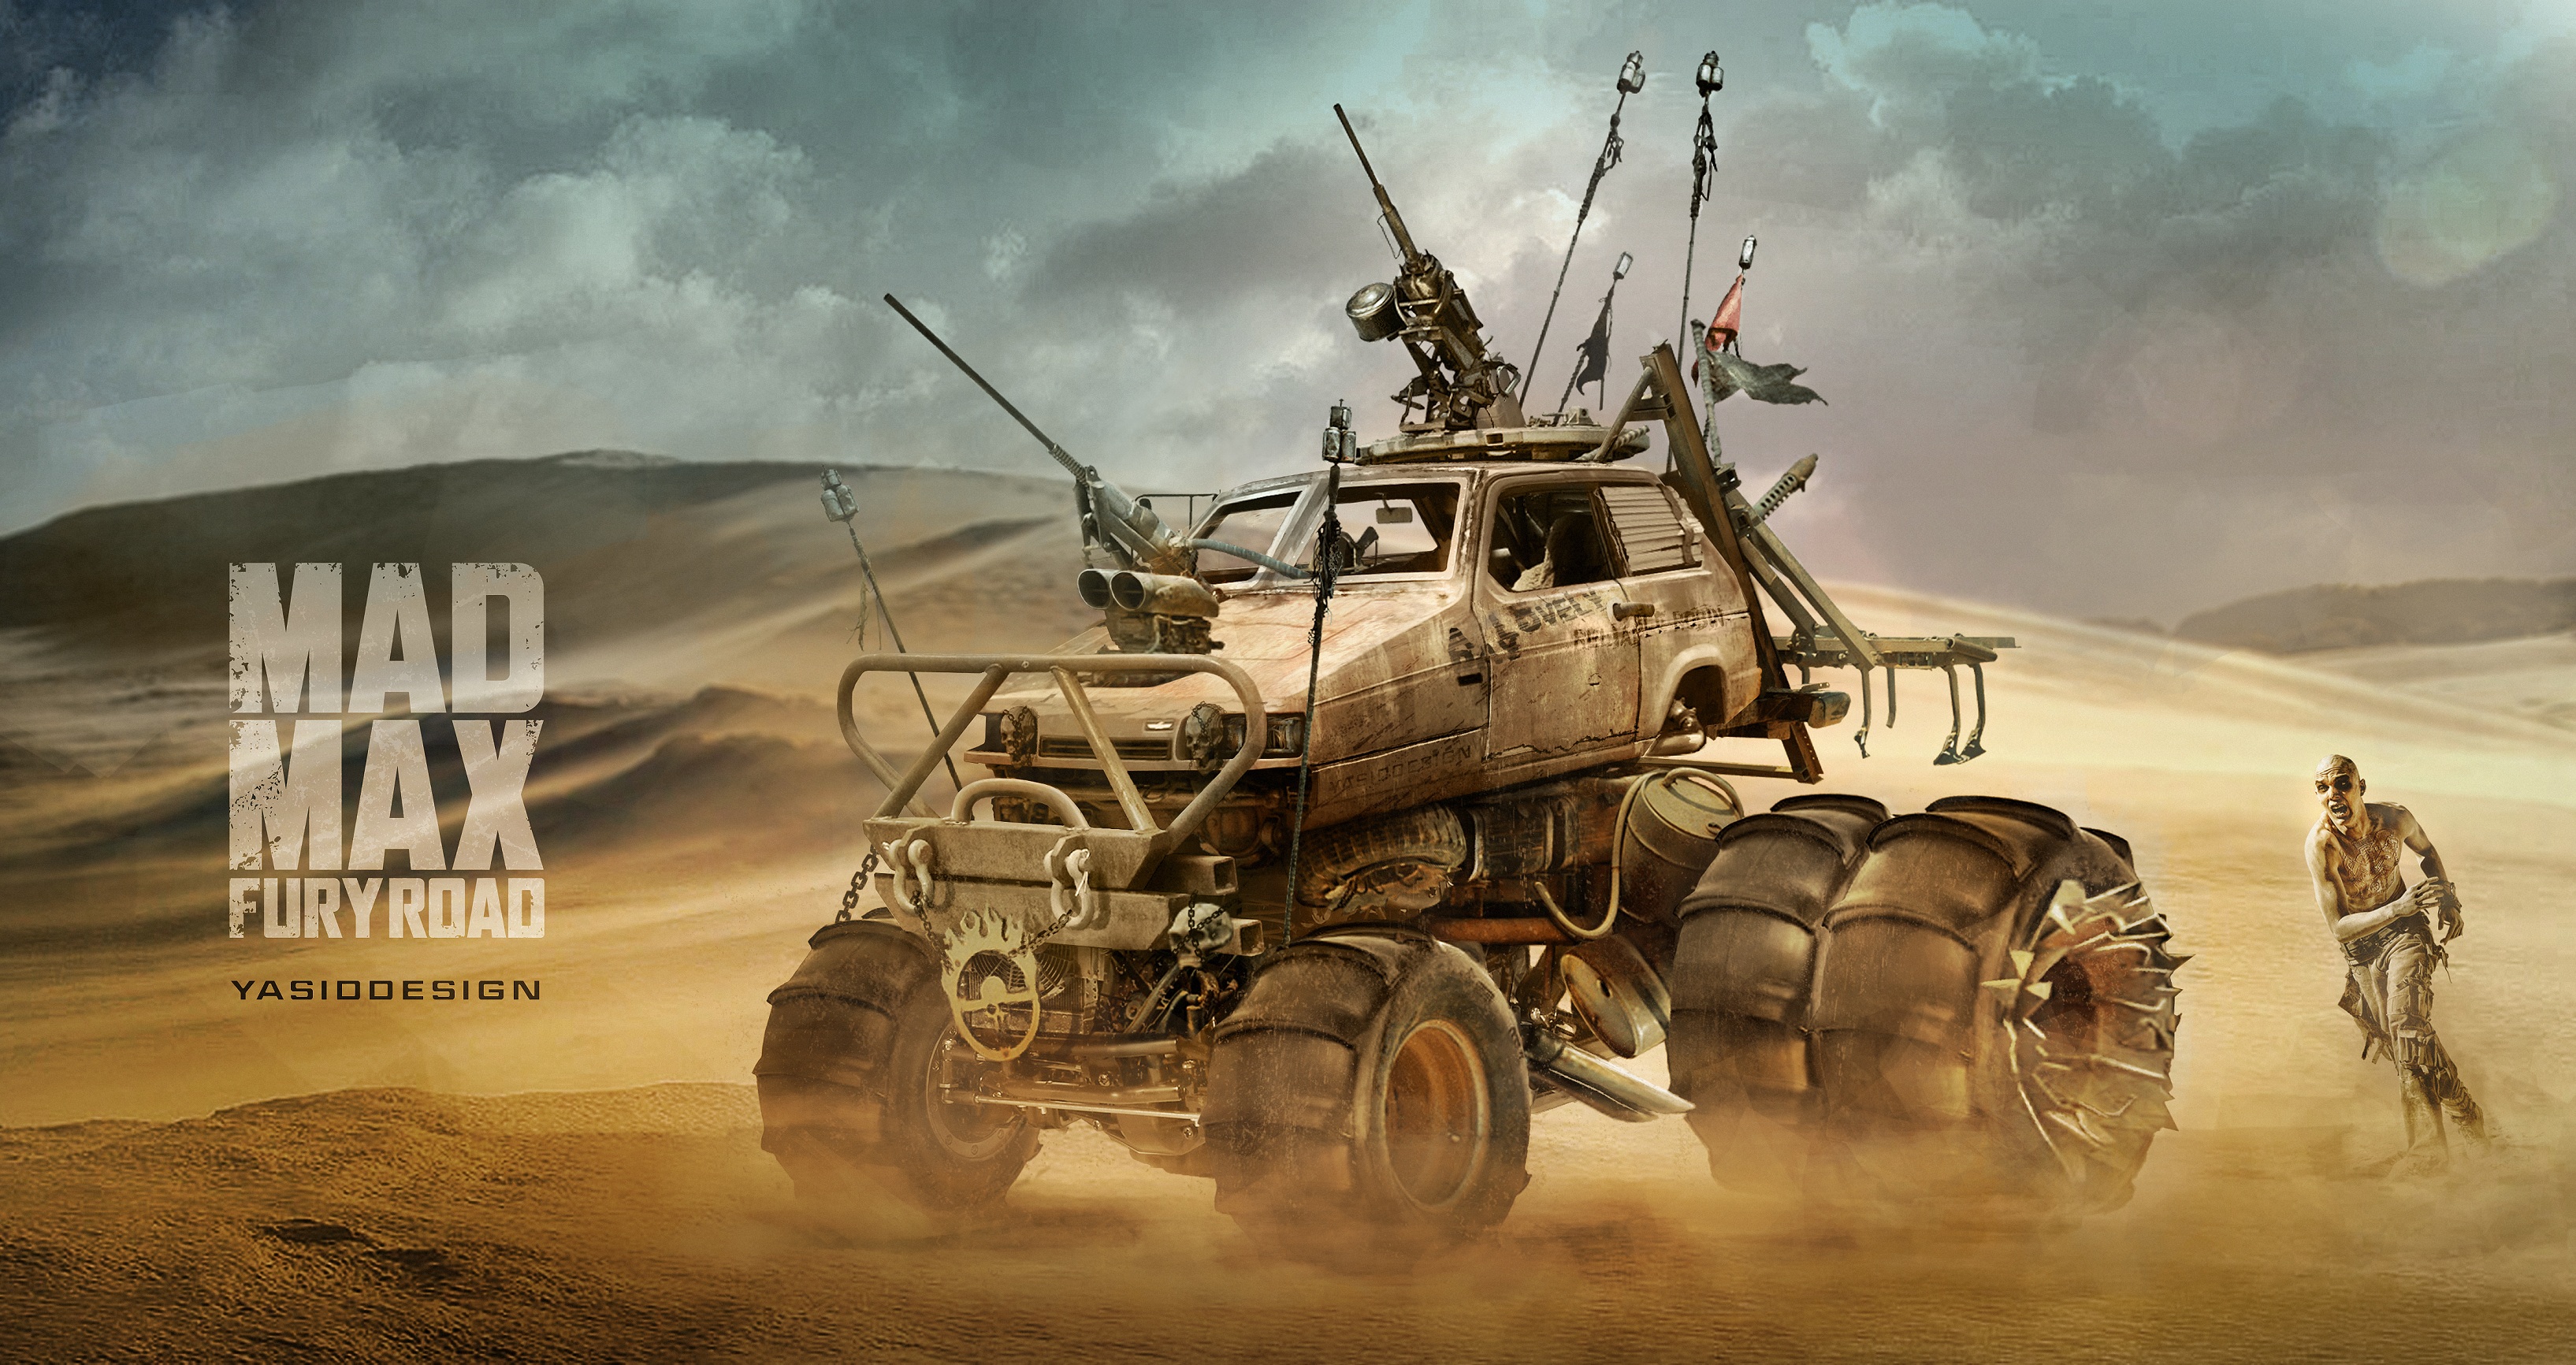 Movie Mad Max: Fury Road HD Wallpaper by Yasiddesign